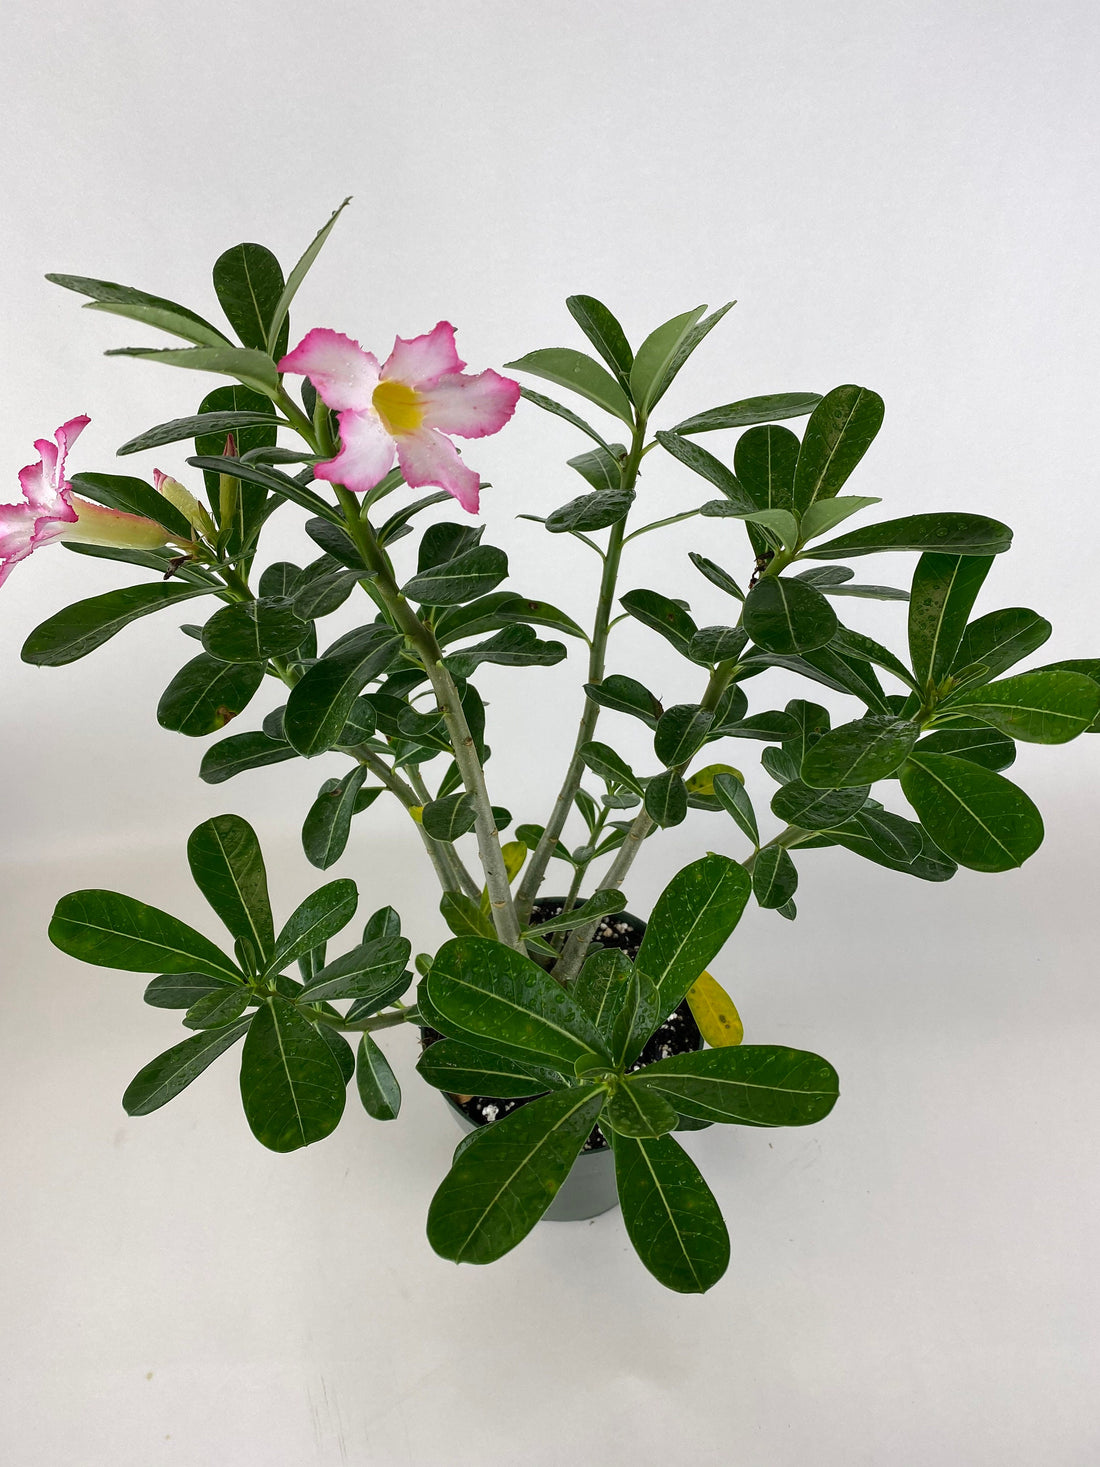 Desert rose - Adenium obesum - by Patomarazul - JungleDragon